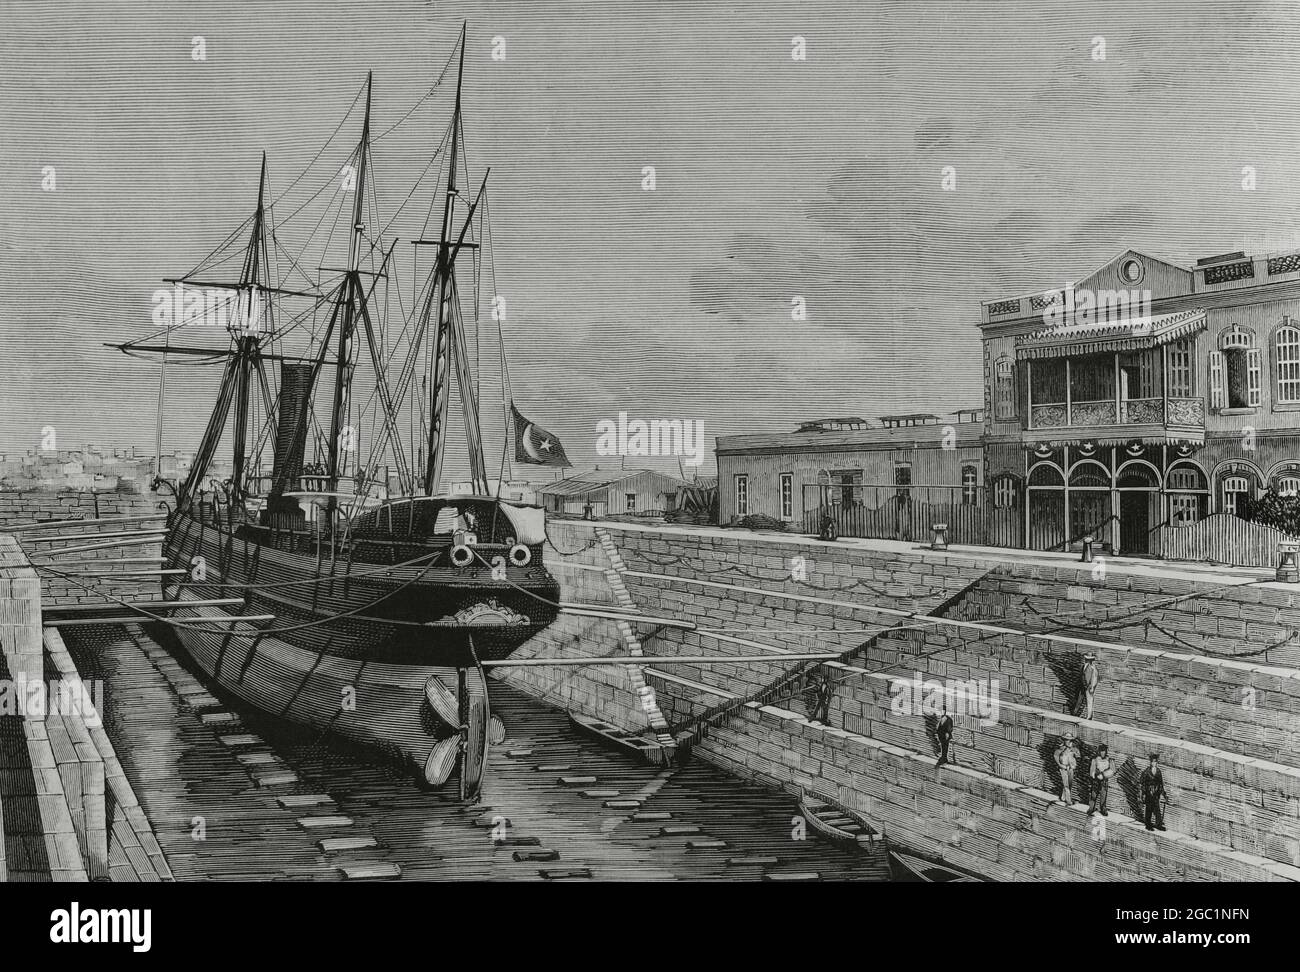 Egypt, Suez. Dry dock, built by the Egyptian government. Drawing by A. de Caula. Engraving. La Ilustración Española y Americana, 1882. Stock Photo